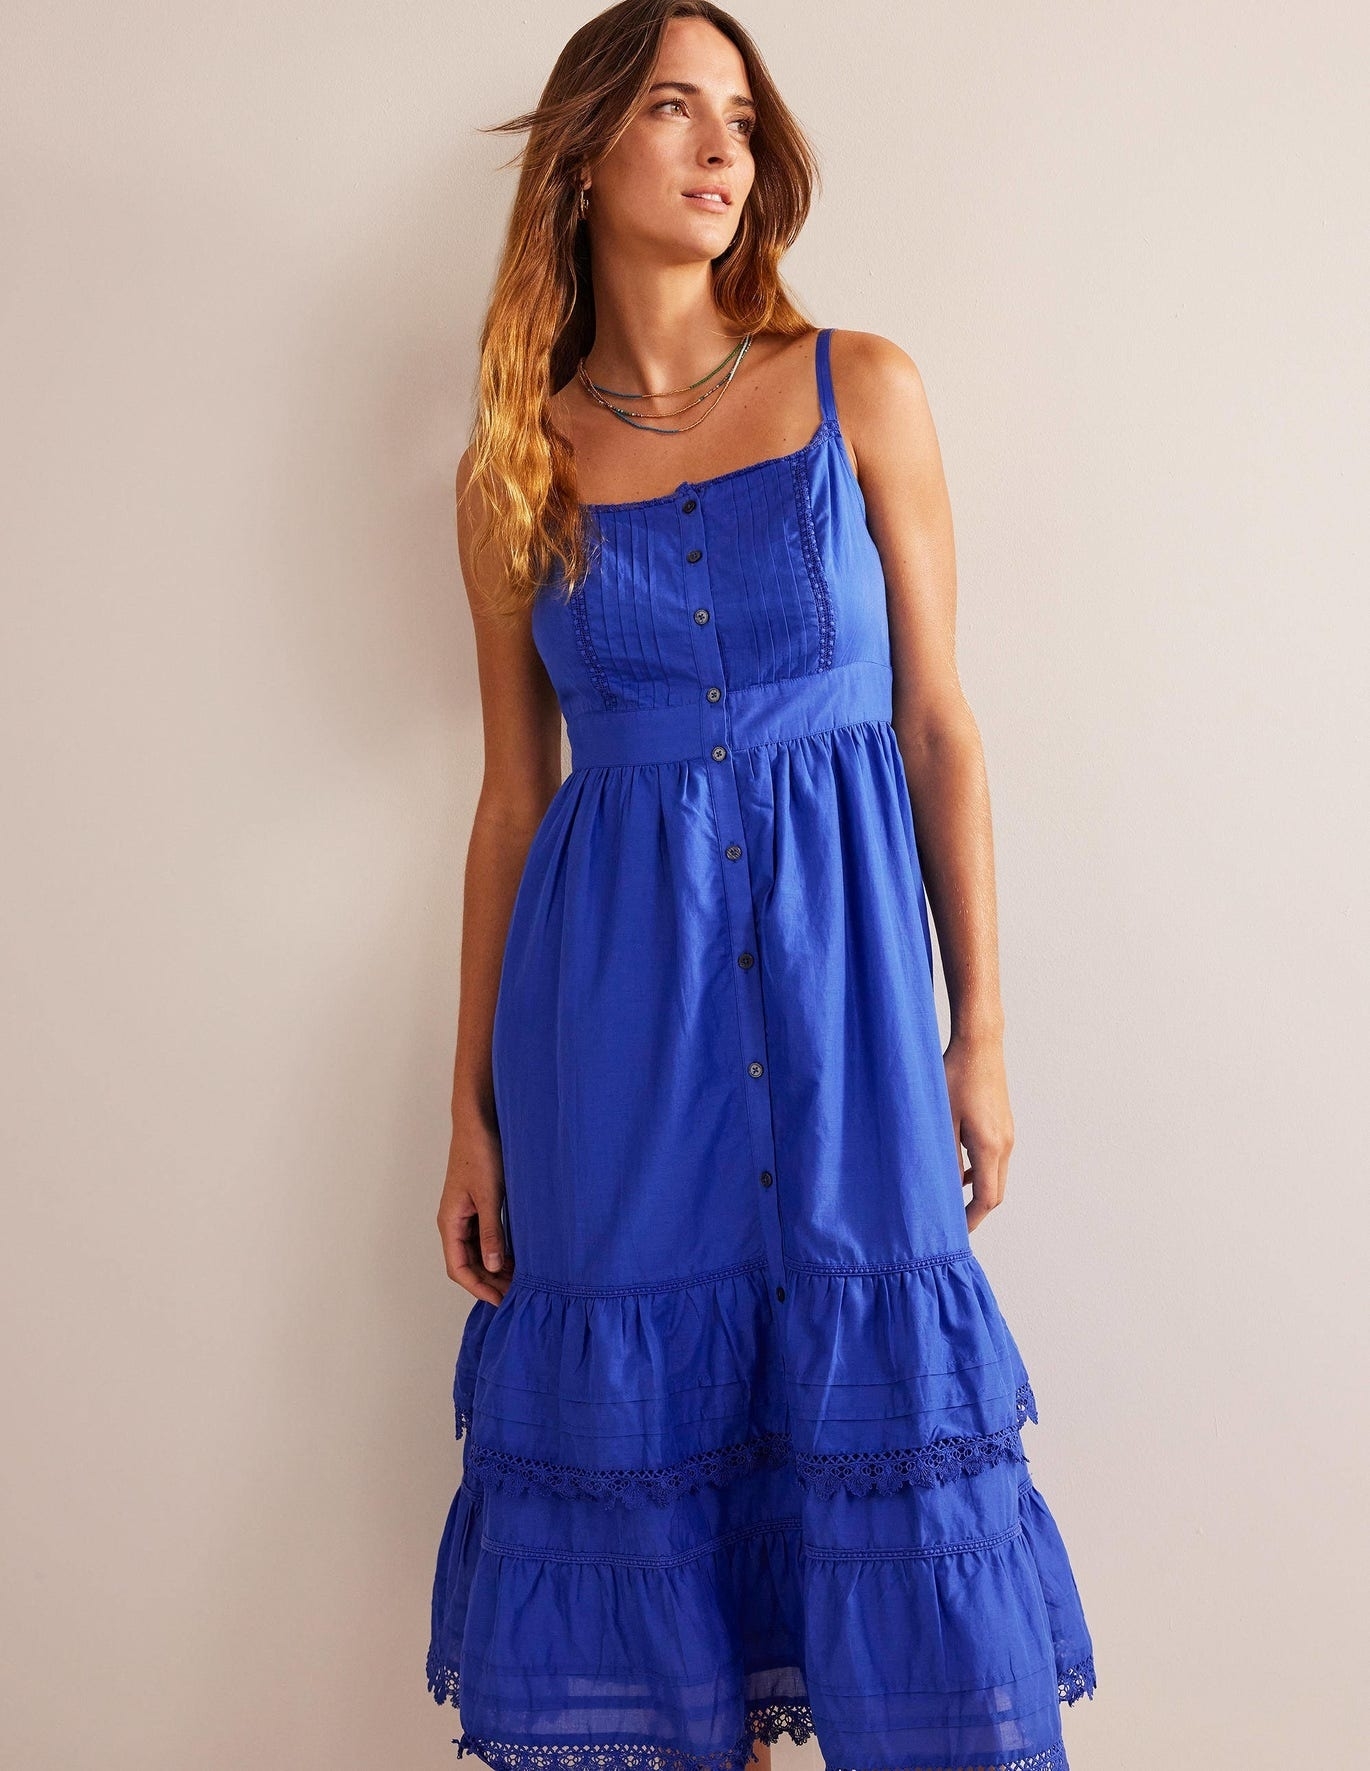 A model wearing a ruffled blue dress.